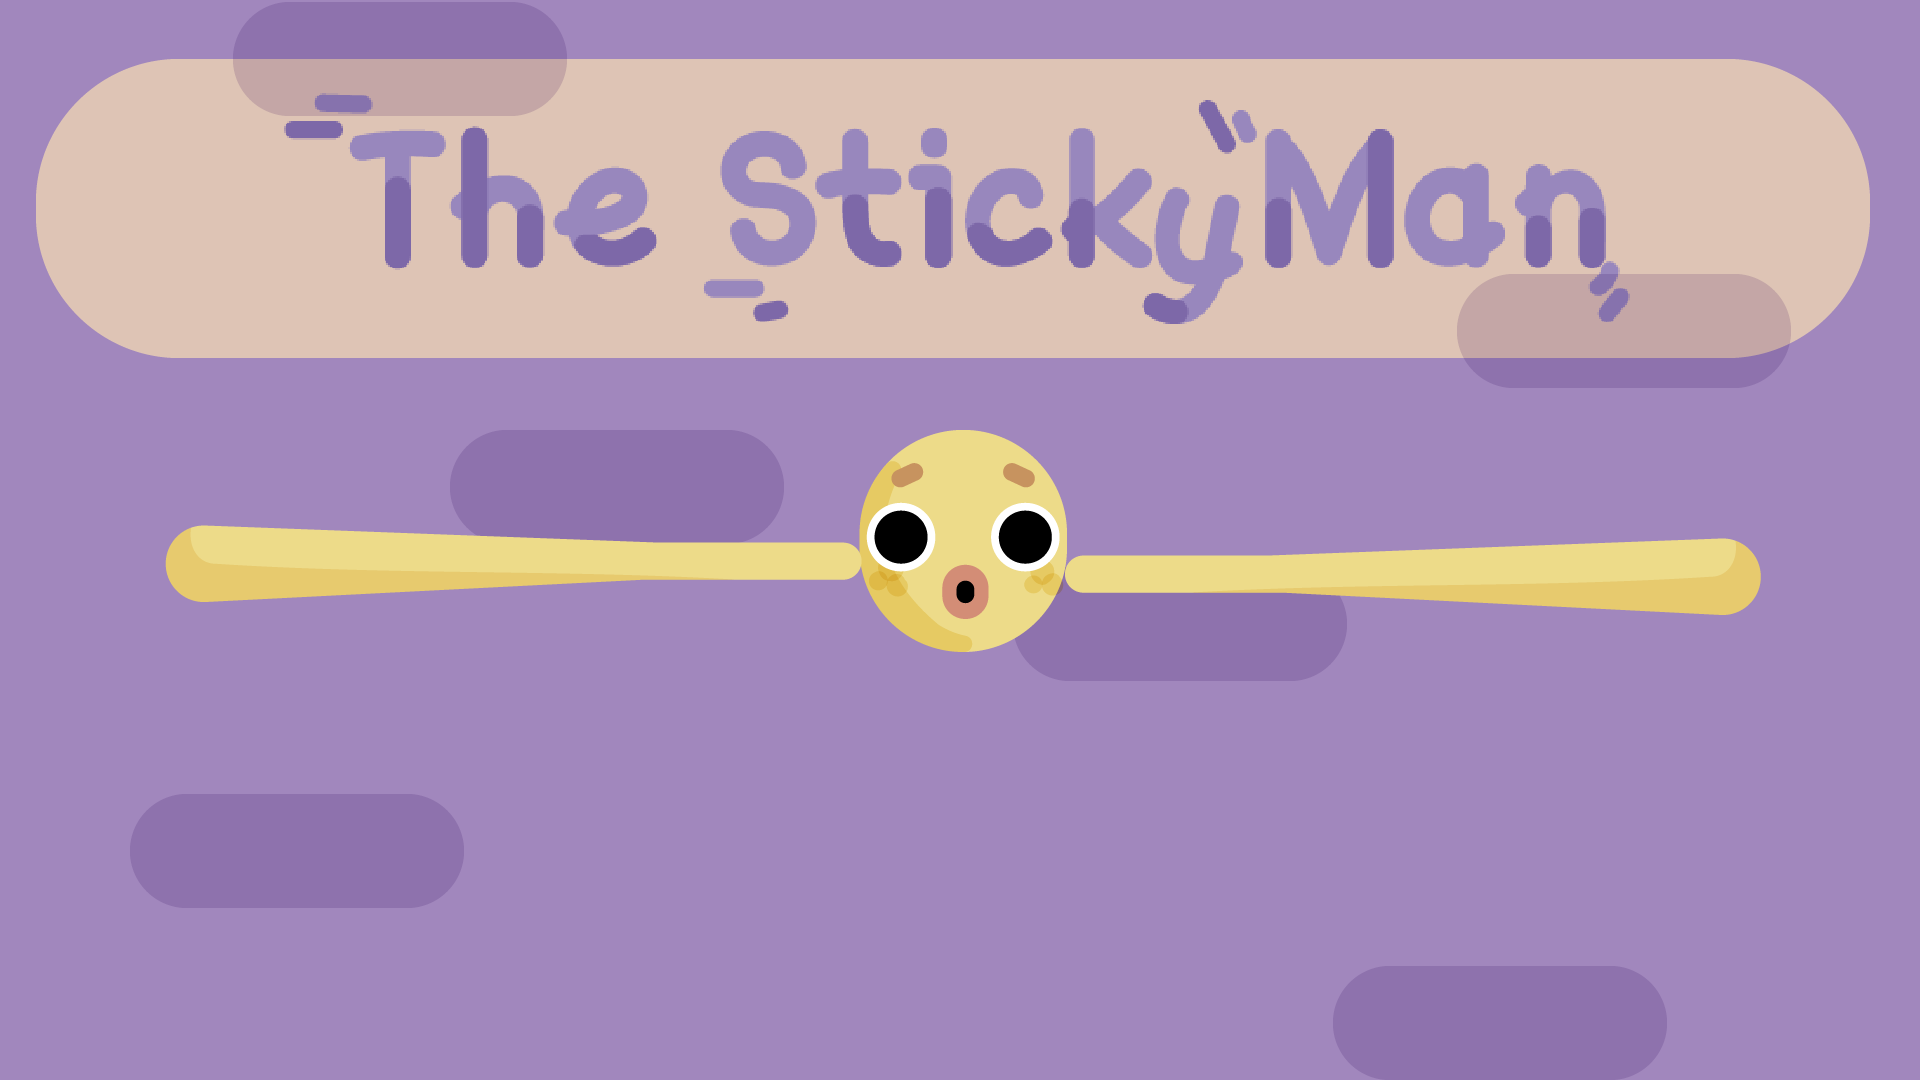 The Stickyman